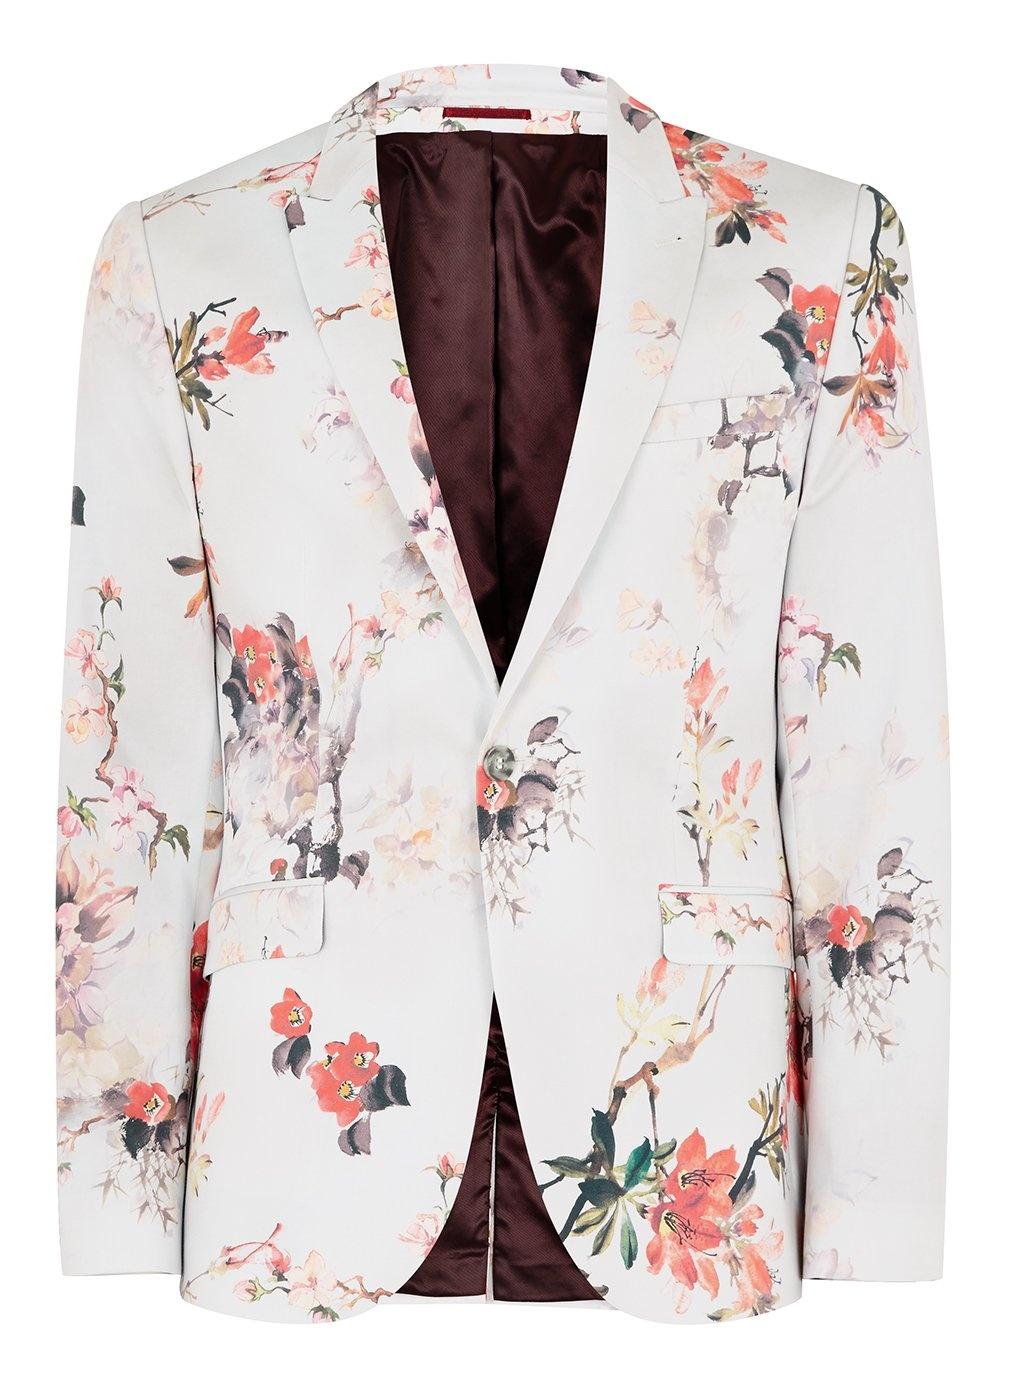 TOPMAN Cotton White Floral Super Skinny Suit Jacket for Men - Lyst